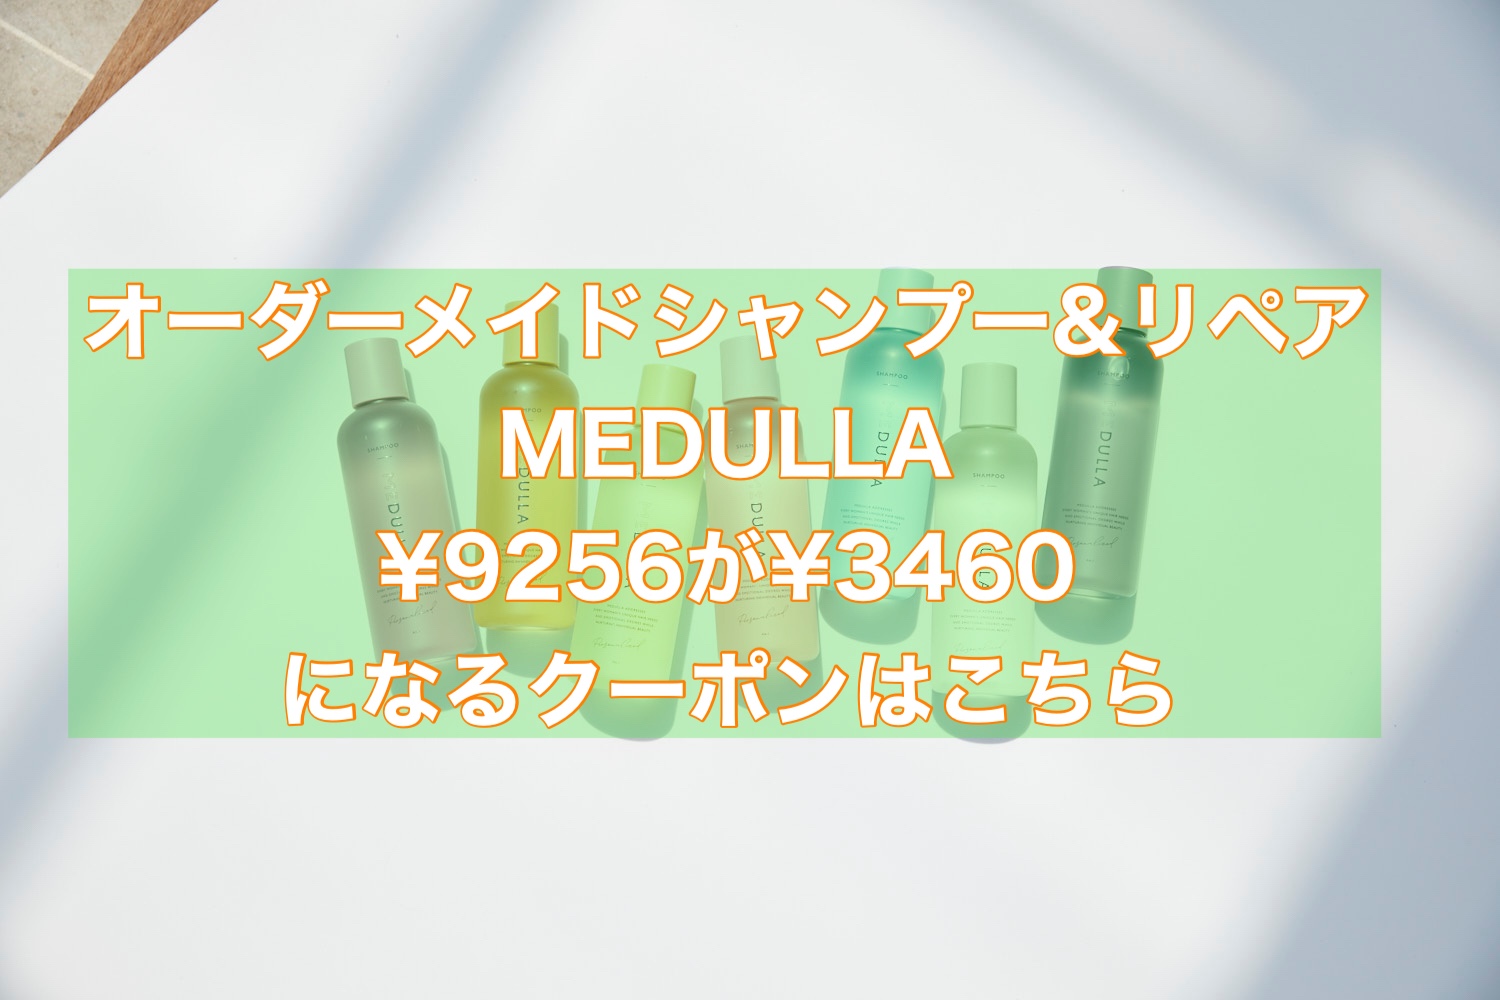 MEDULLA(メデュラ）シャンプーの休止・解約方法とオススメなご利用方法